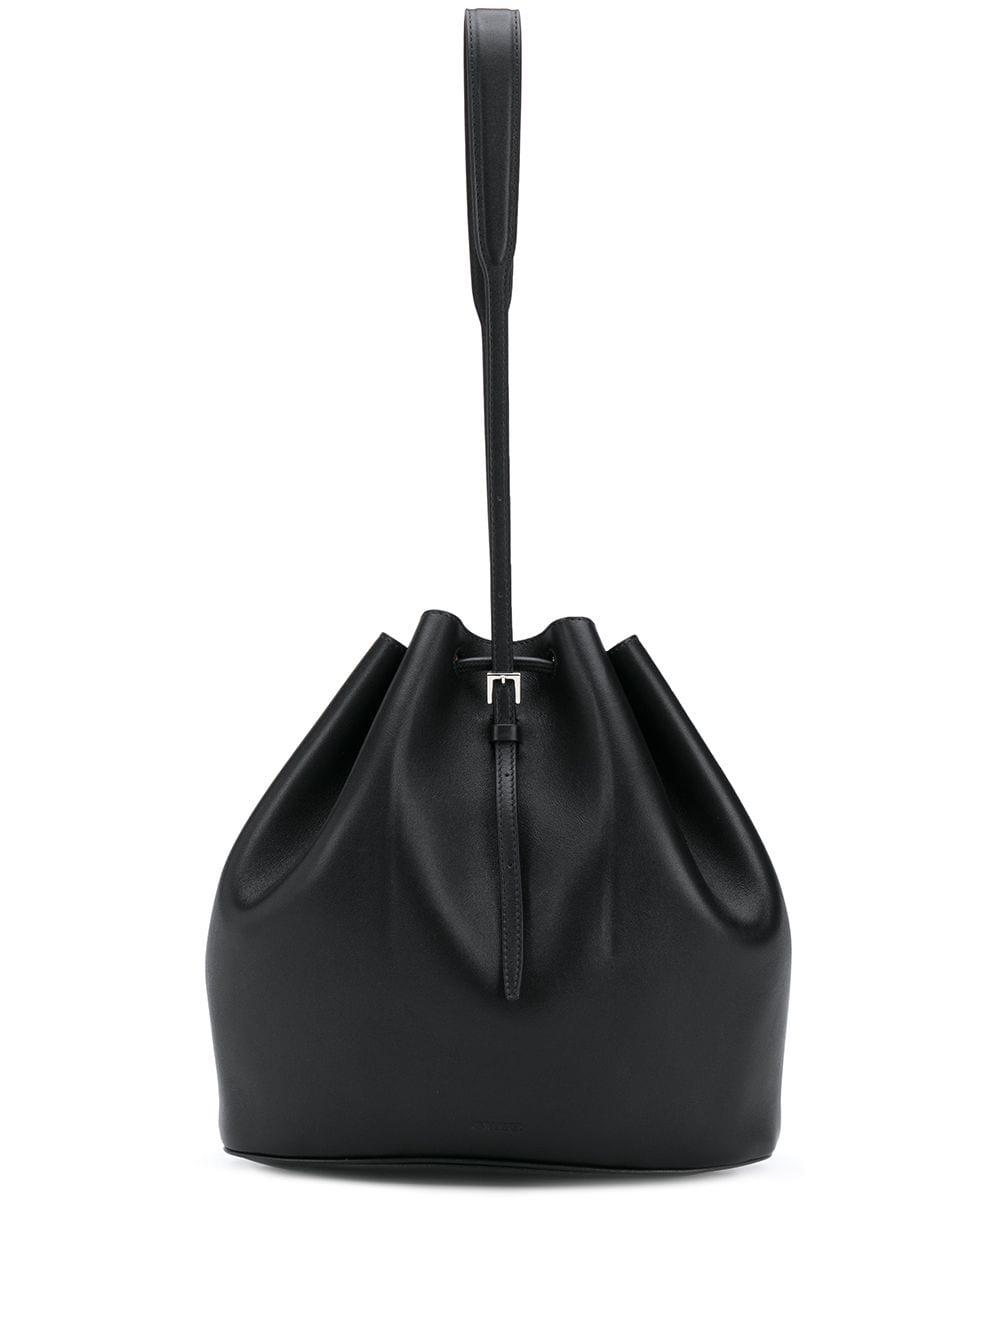 Jil Sander Leather Drawstring Bucket Bag in Black | Lyst